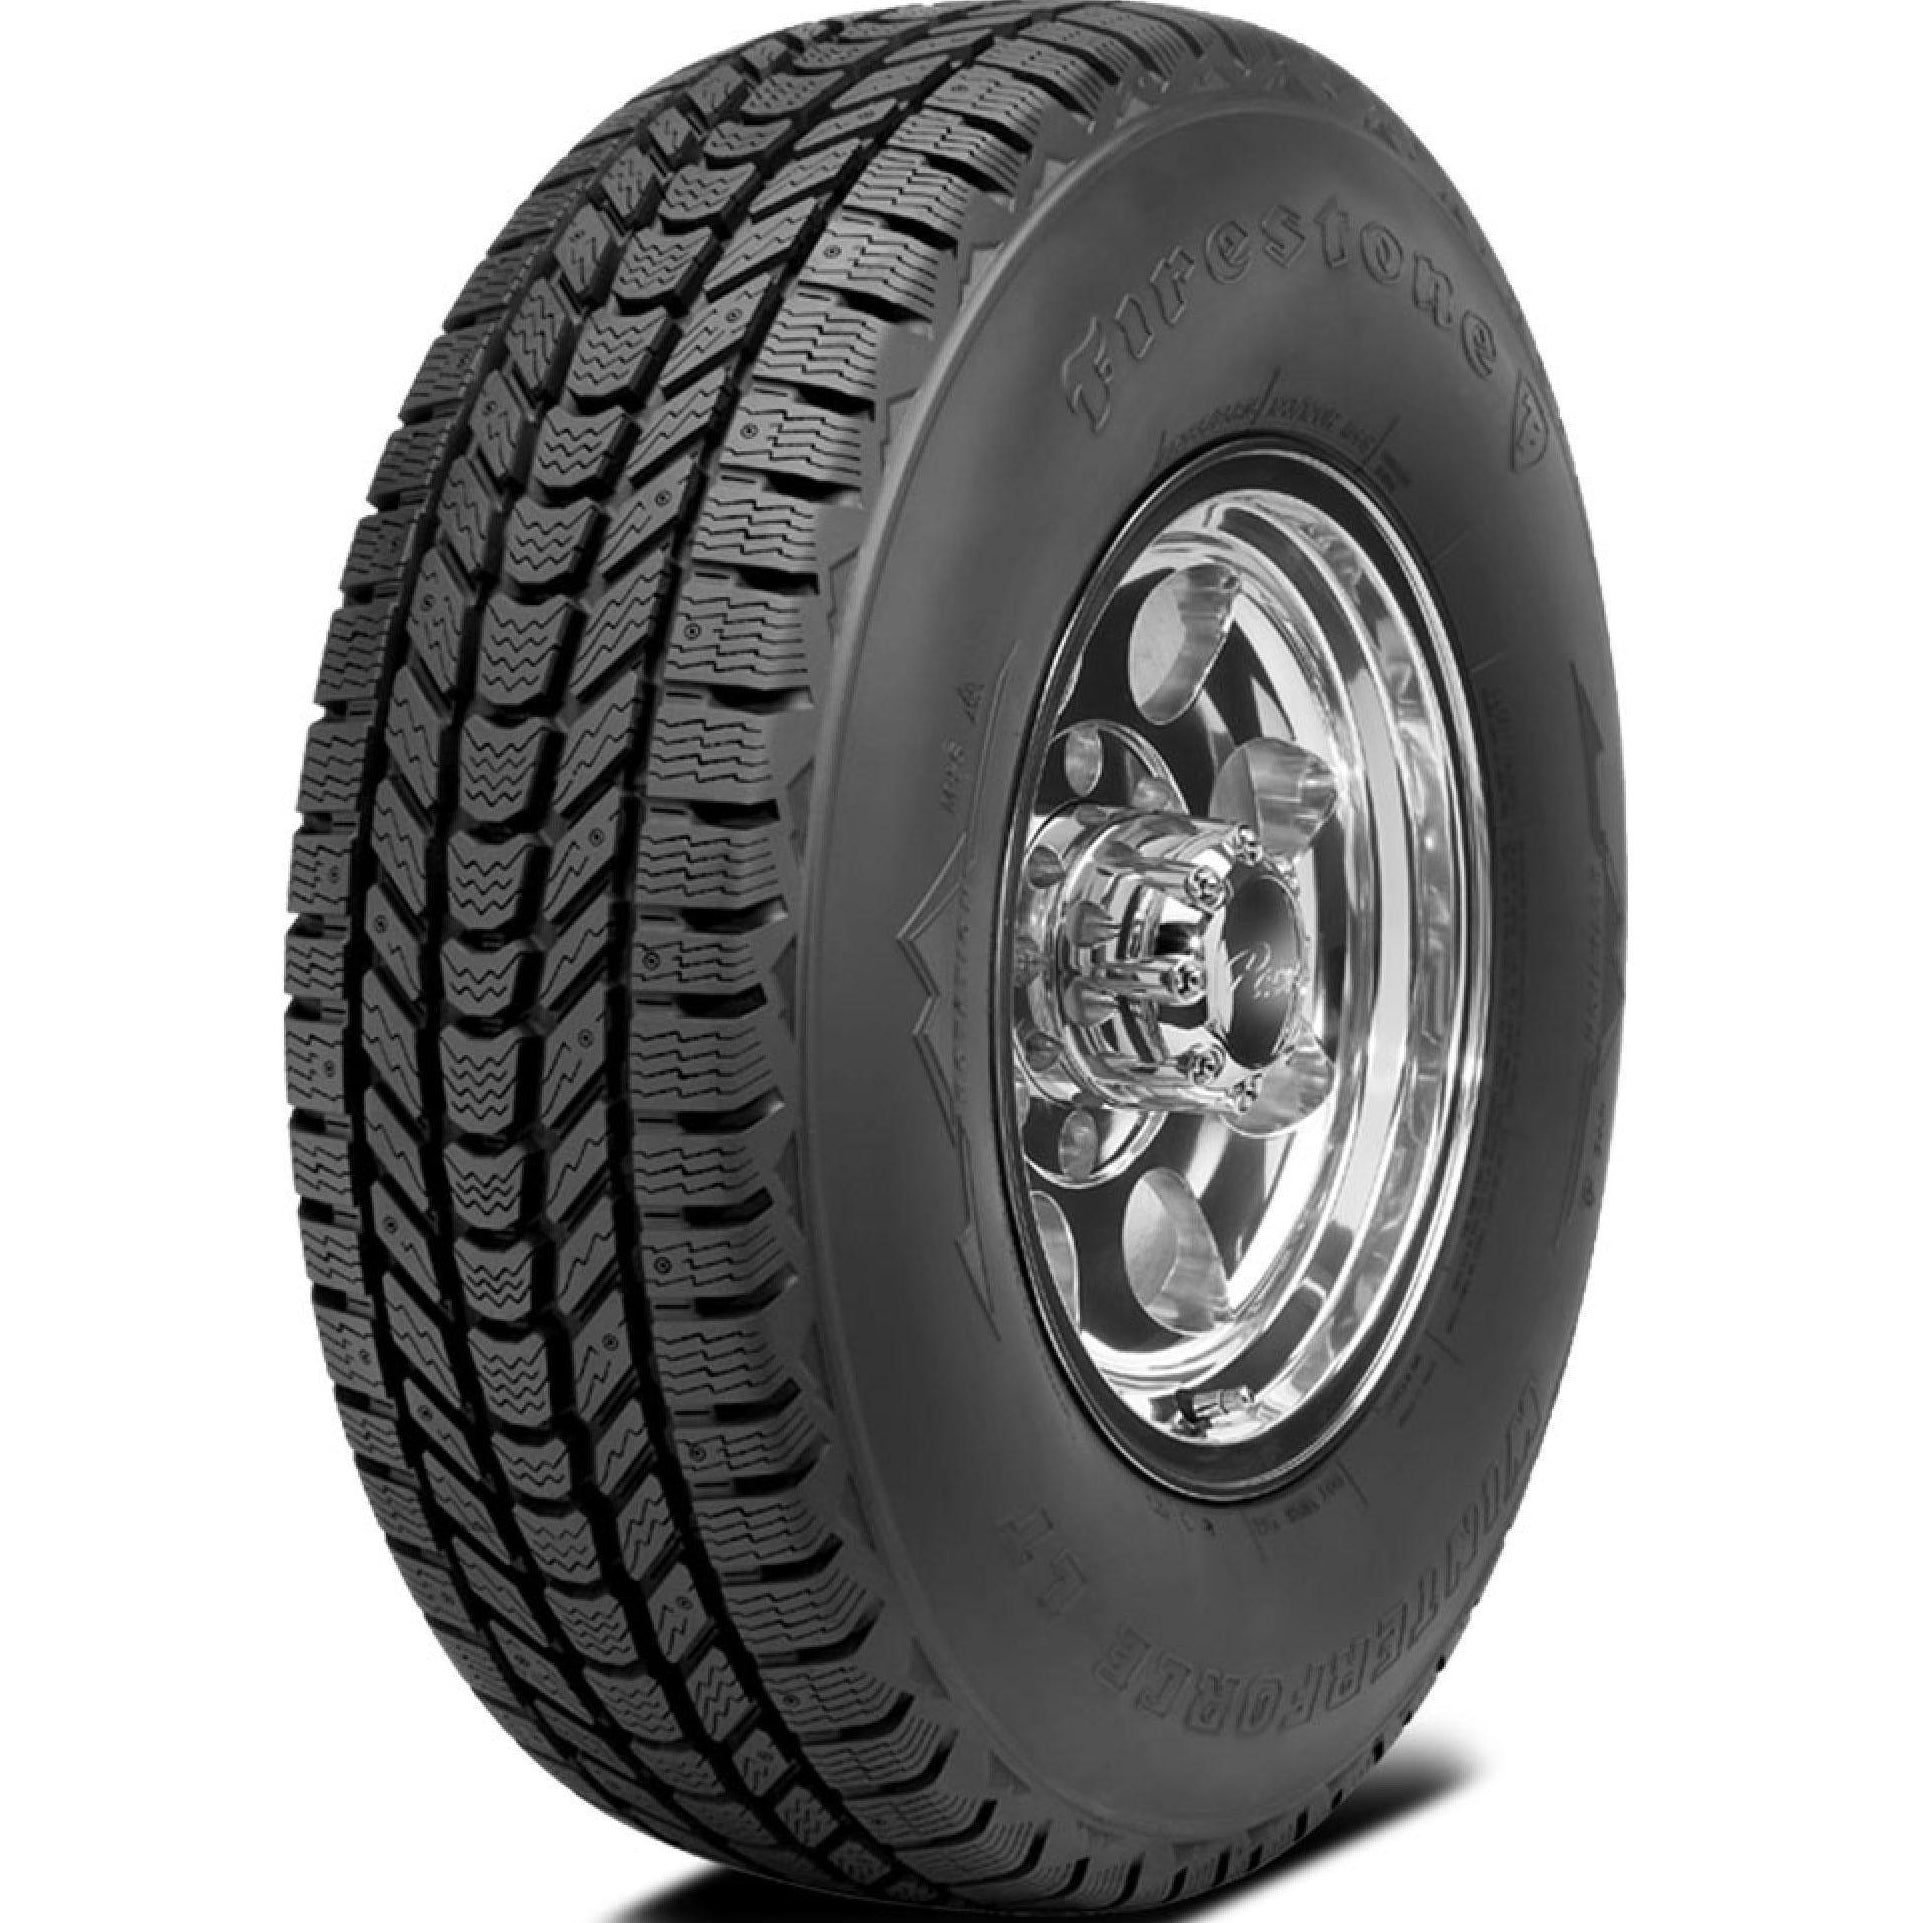 FIRESTONE WINTERFORCE LT 215/85R16 (30.4X8.5R 16) Tires